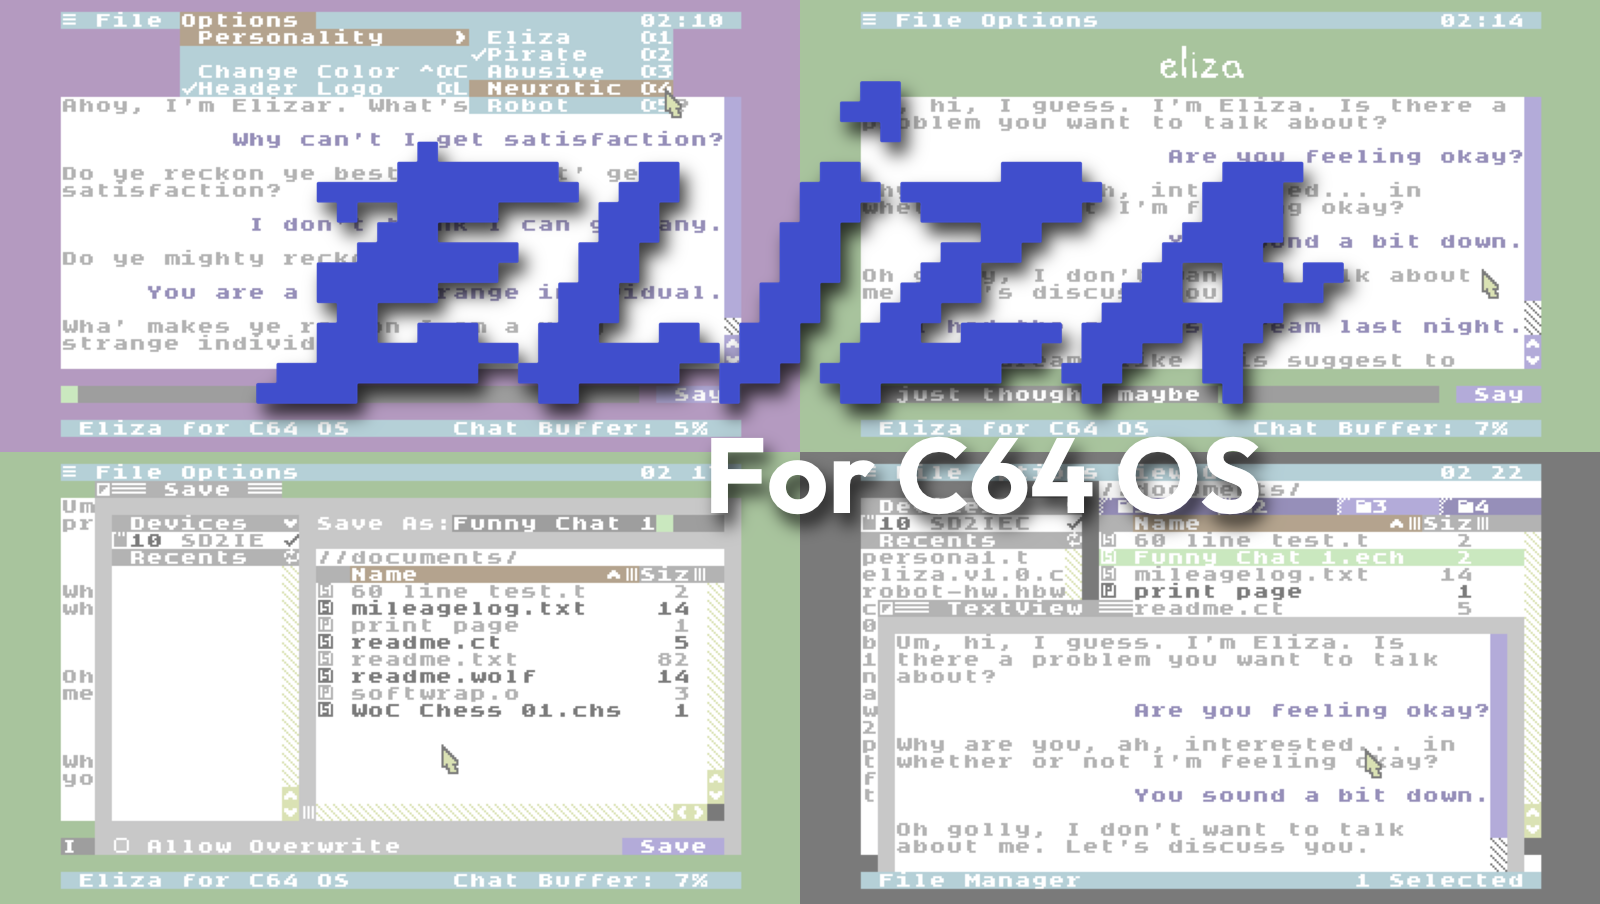 Eliza for C64 OS